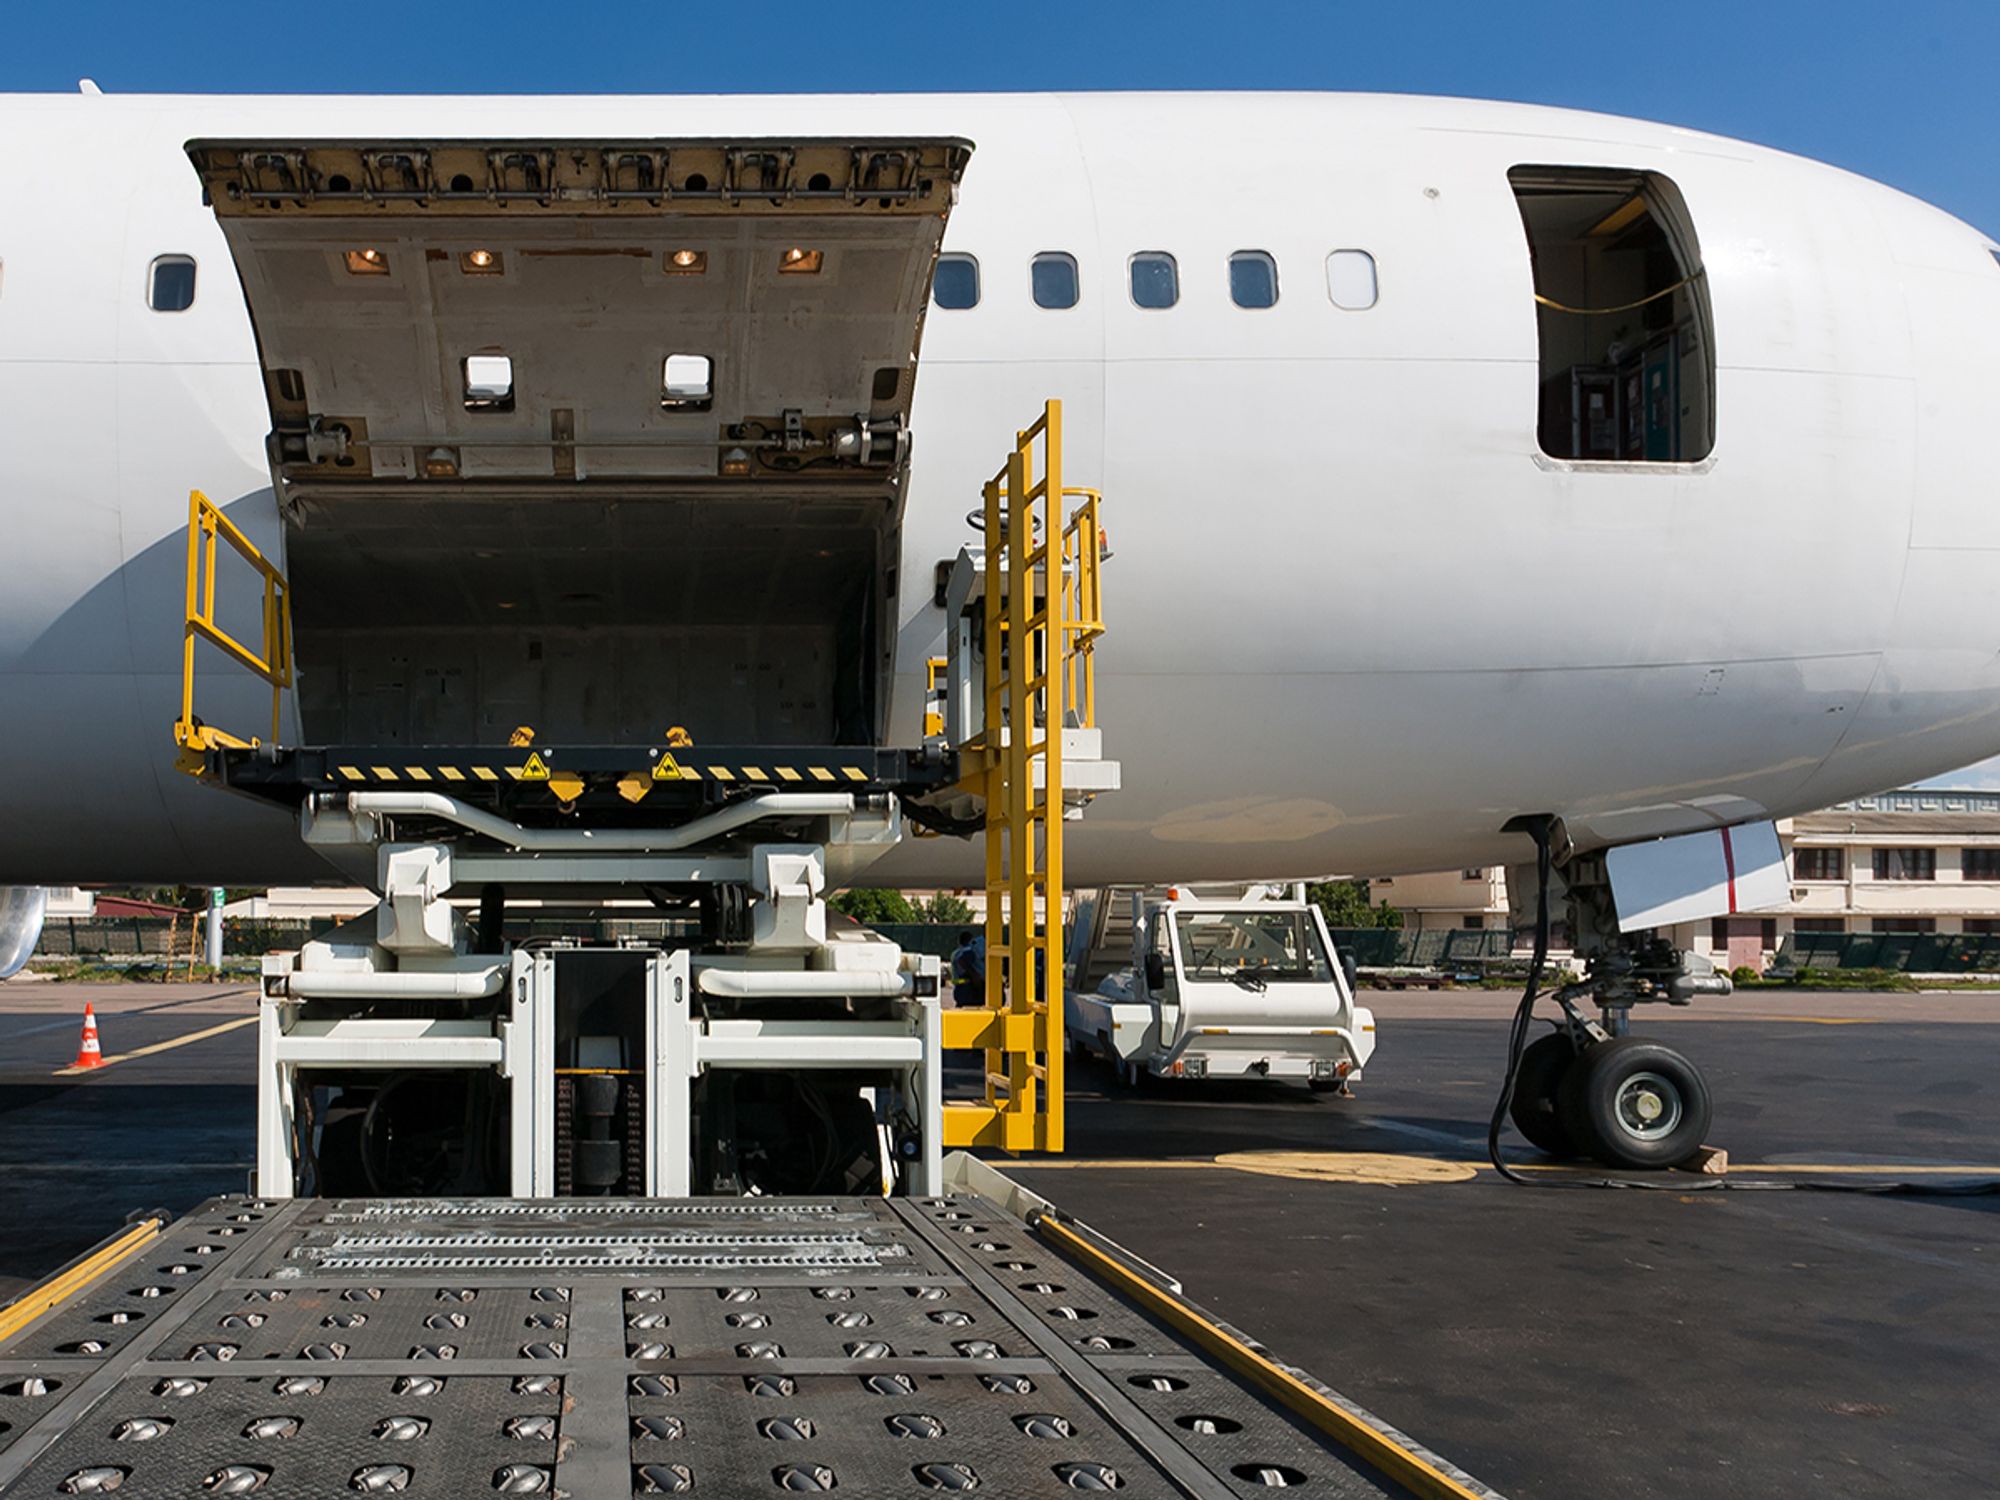 IATA limitations when transporting dangerous goods